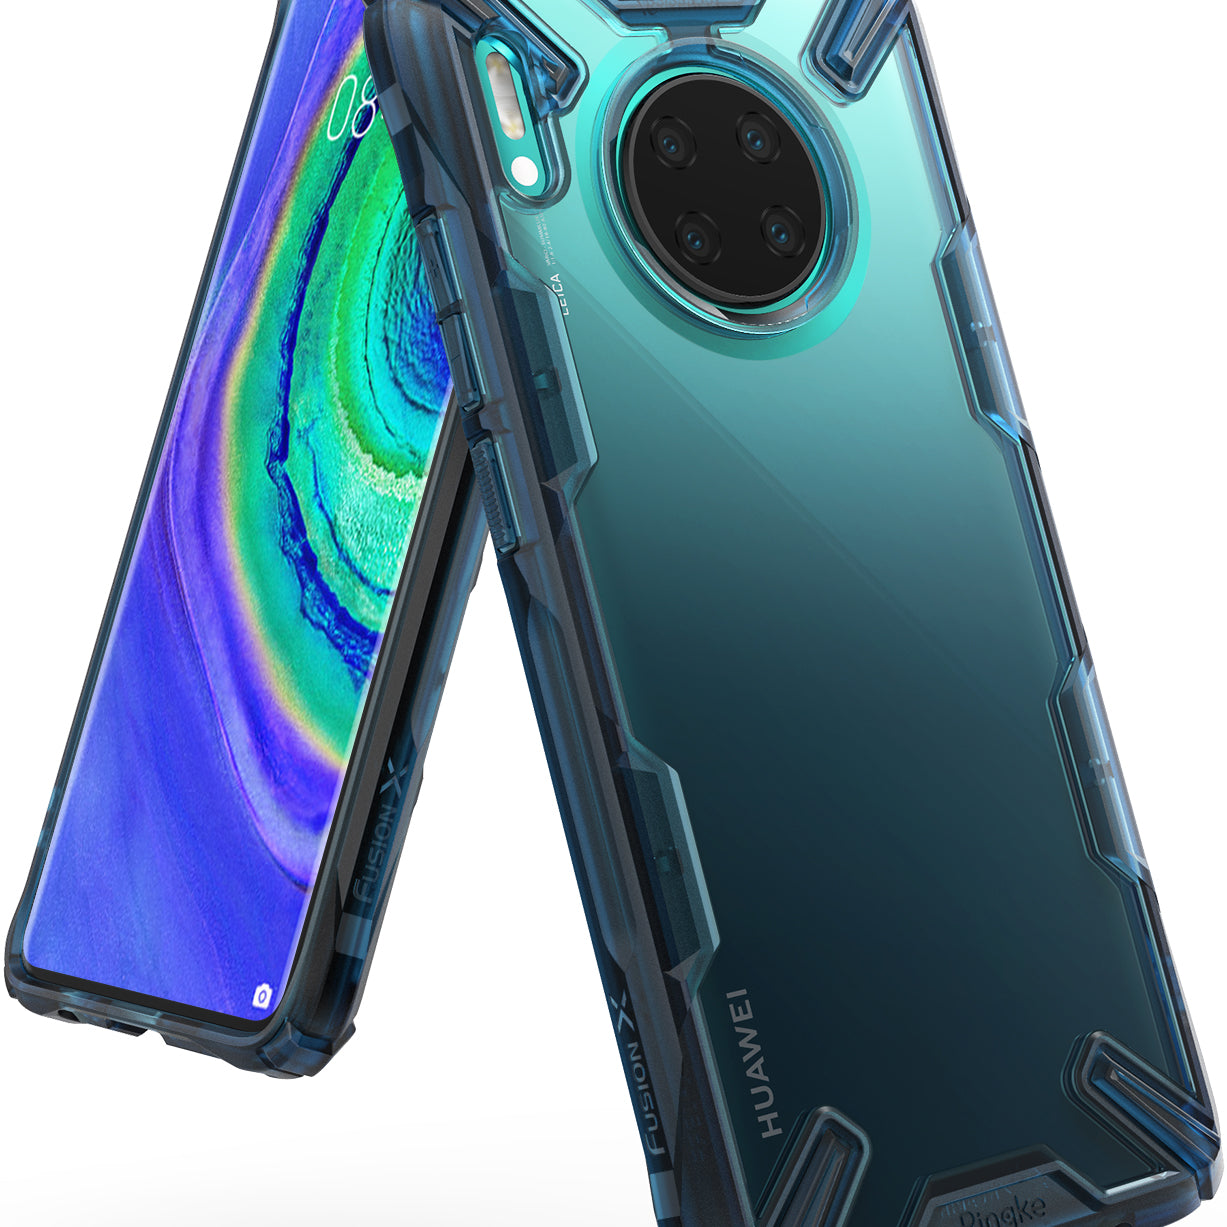 Huawei Mate 30 [FUSION-X] space blue